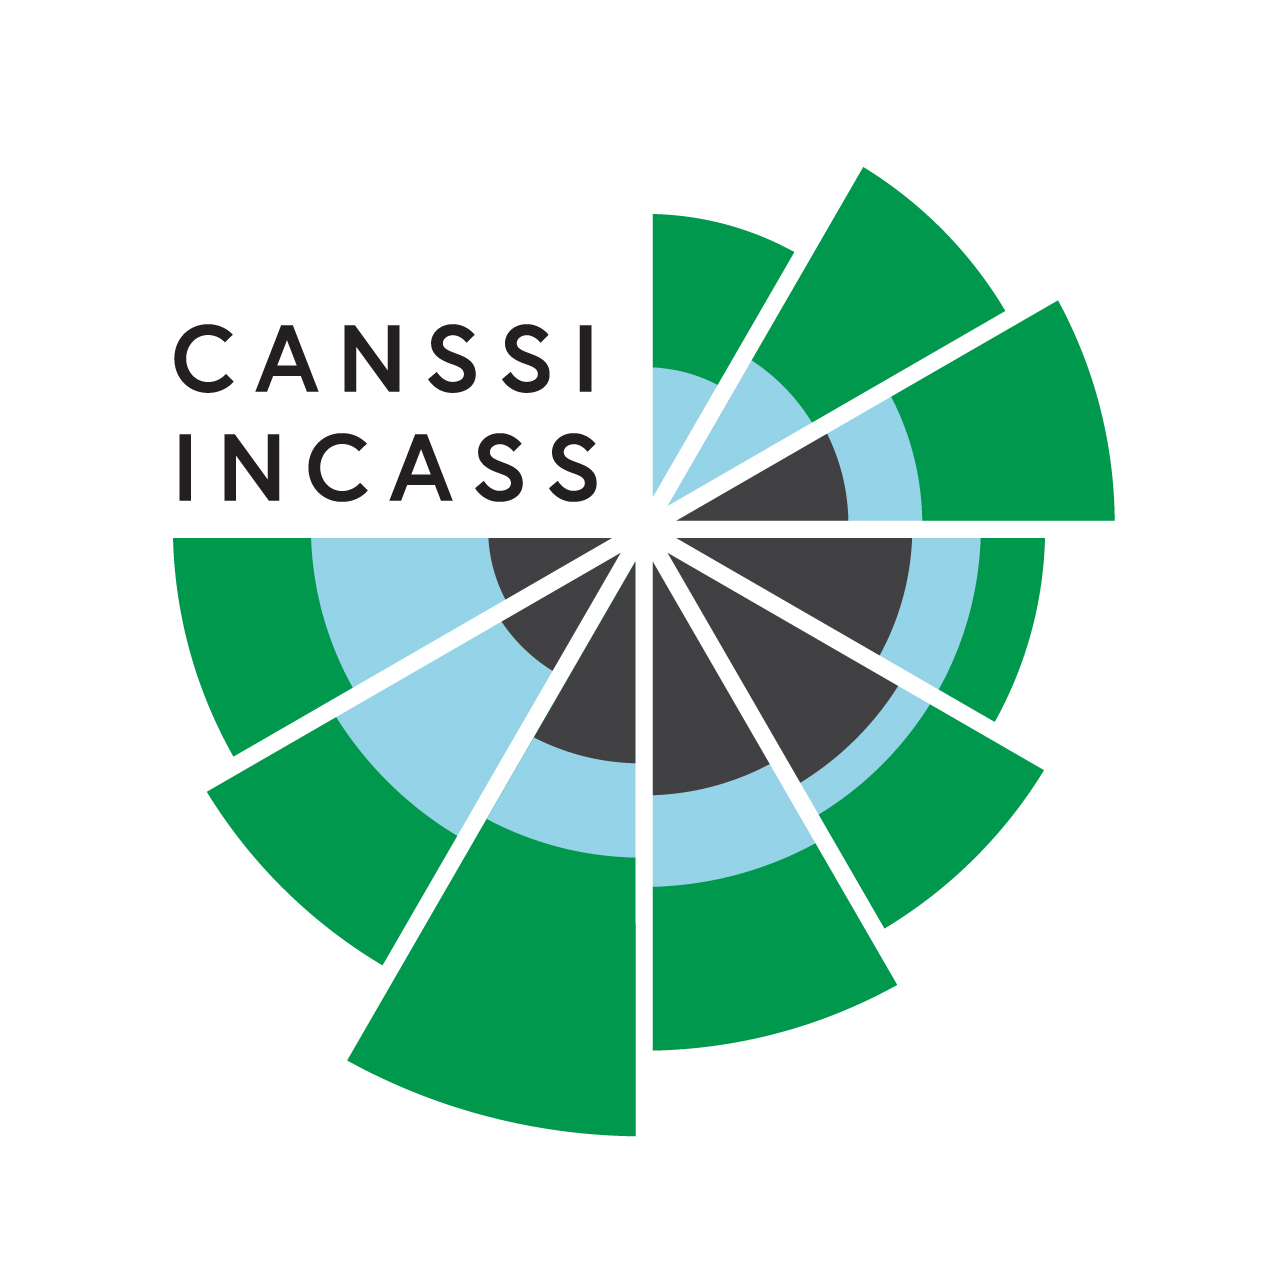 CANSSI - Canadian Statistical Sciences Institute